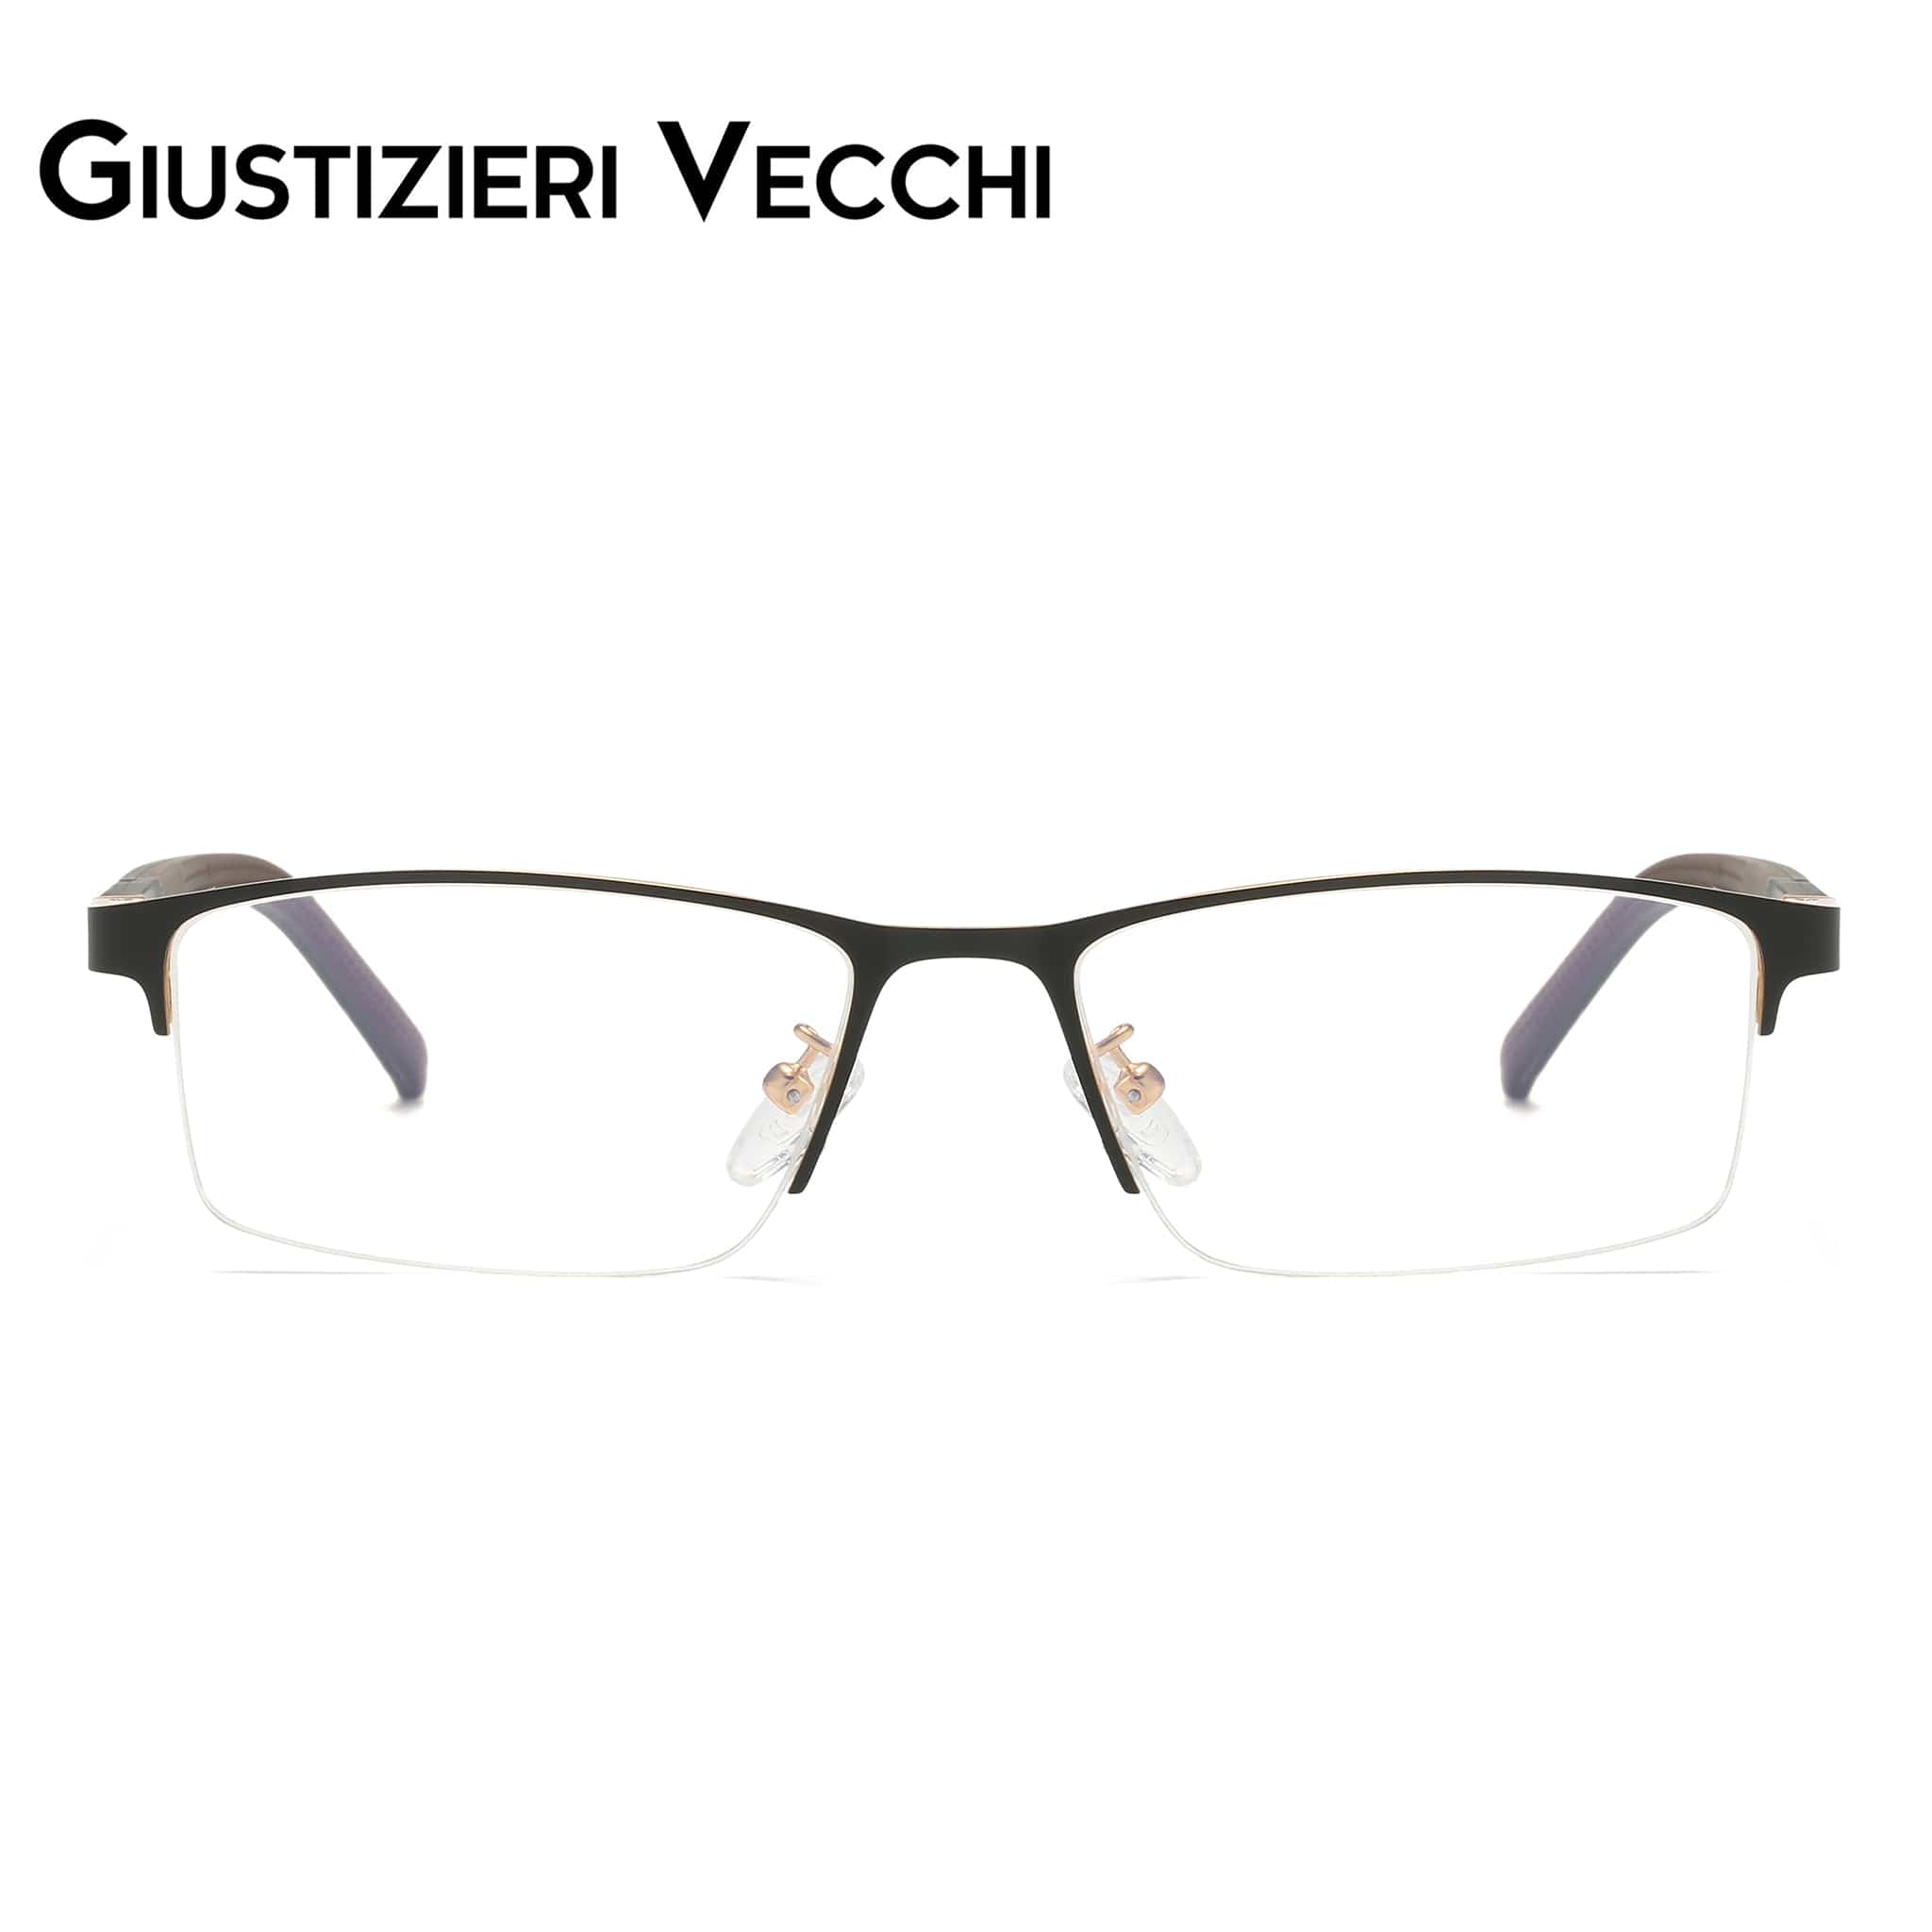 GIUSTIZIERI VECCHI Eyeglasses Large / Black with Brown HydroFlash Uno